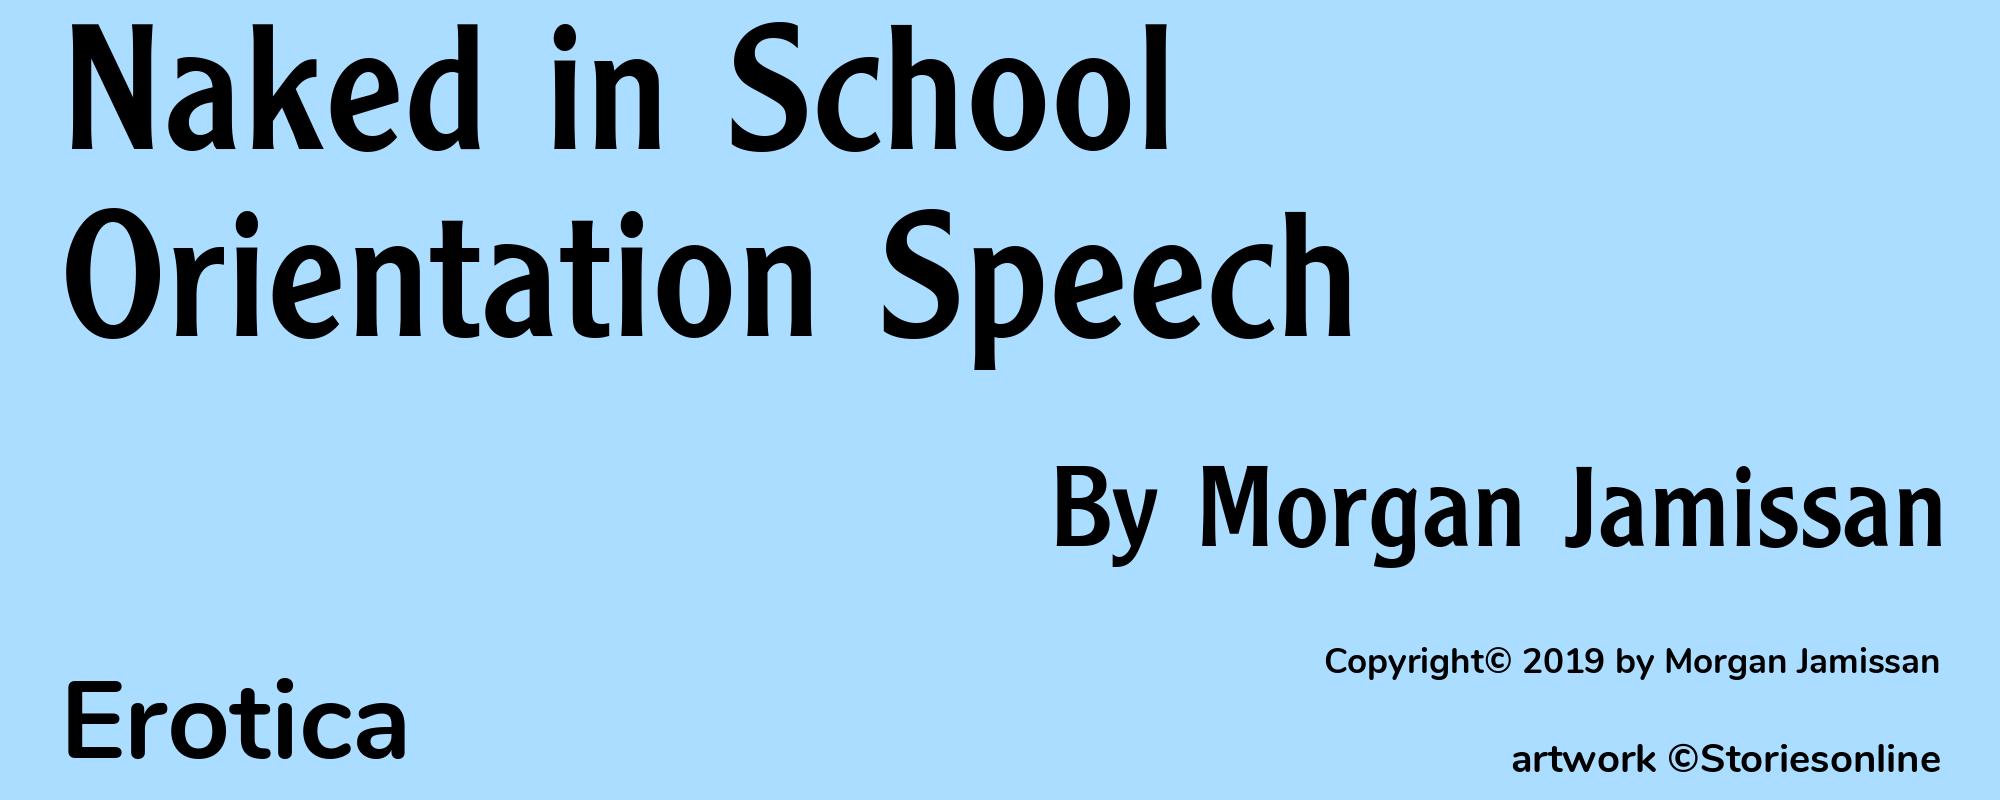 Naked in School Orientation Speech - Cover